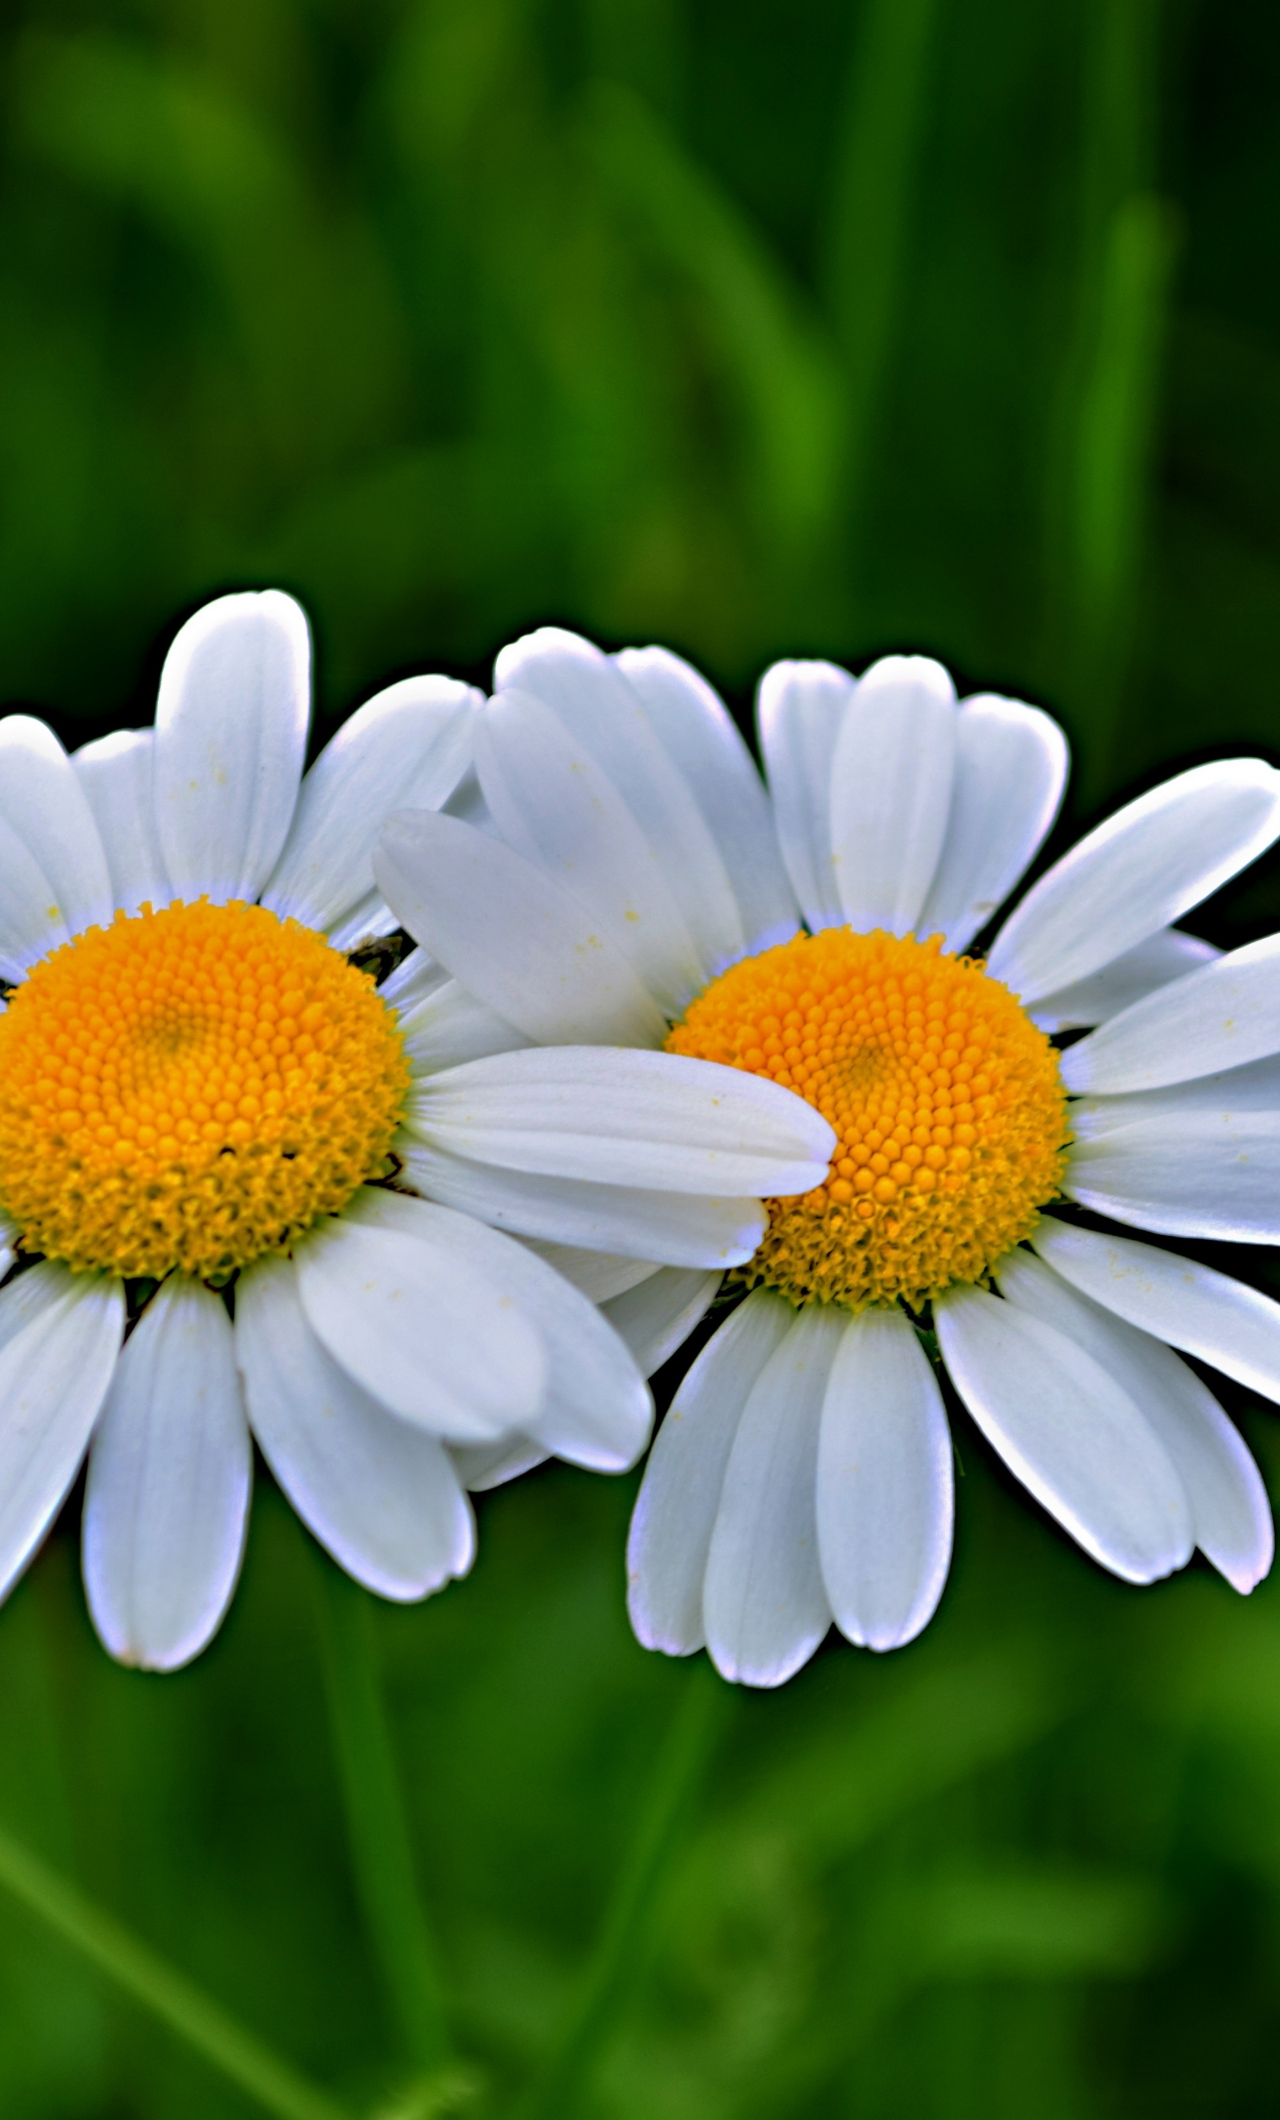 Download Wallpaper 1280x2120 Daisy Flowers Pair Blur Iphone 6 Plus